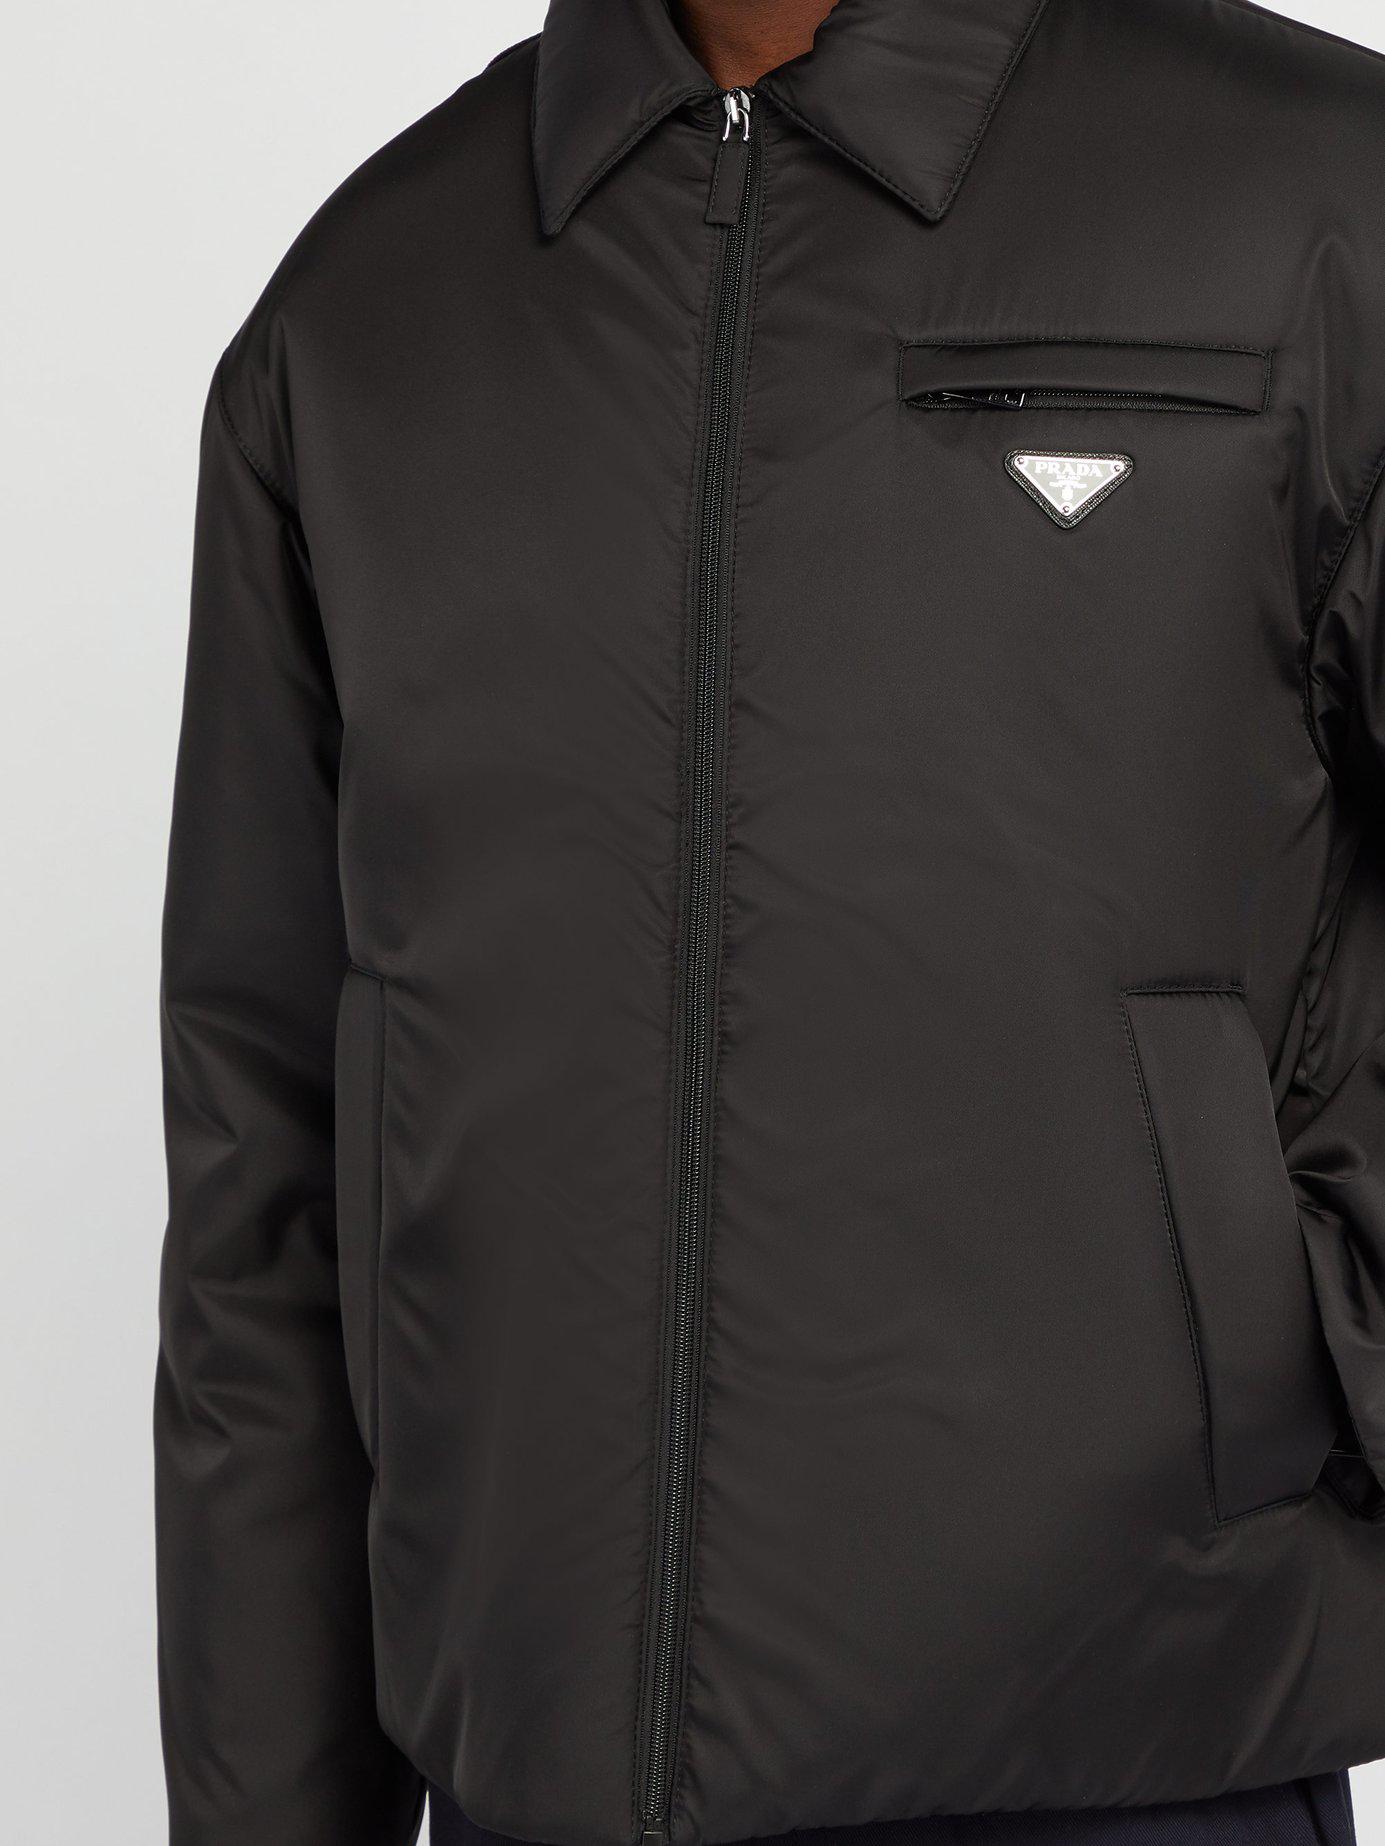 激安直営店 Nylon Jacket PRADA and 2019ss Loden emblem nylon Prada jacket ...